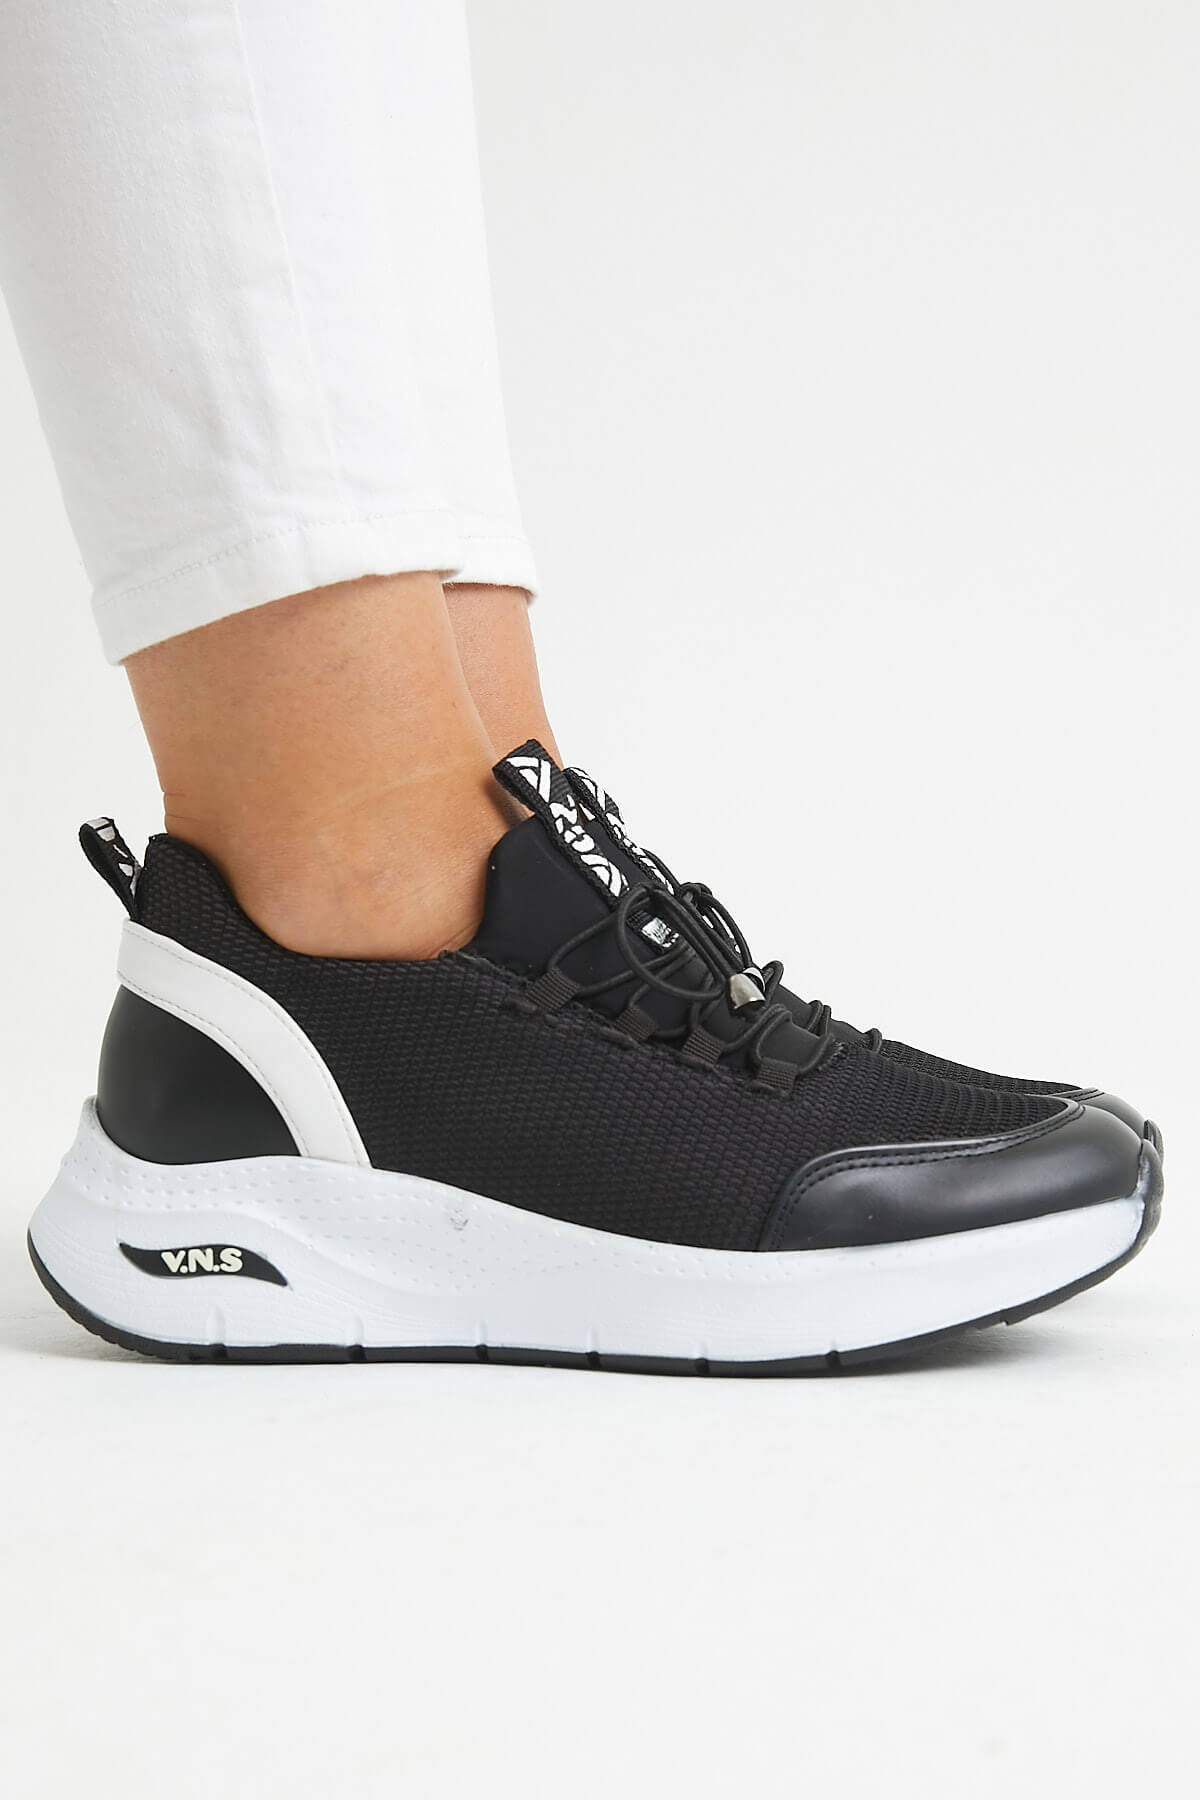 Kadın Sneakers Siyah 2115004Y - Thumbnail